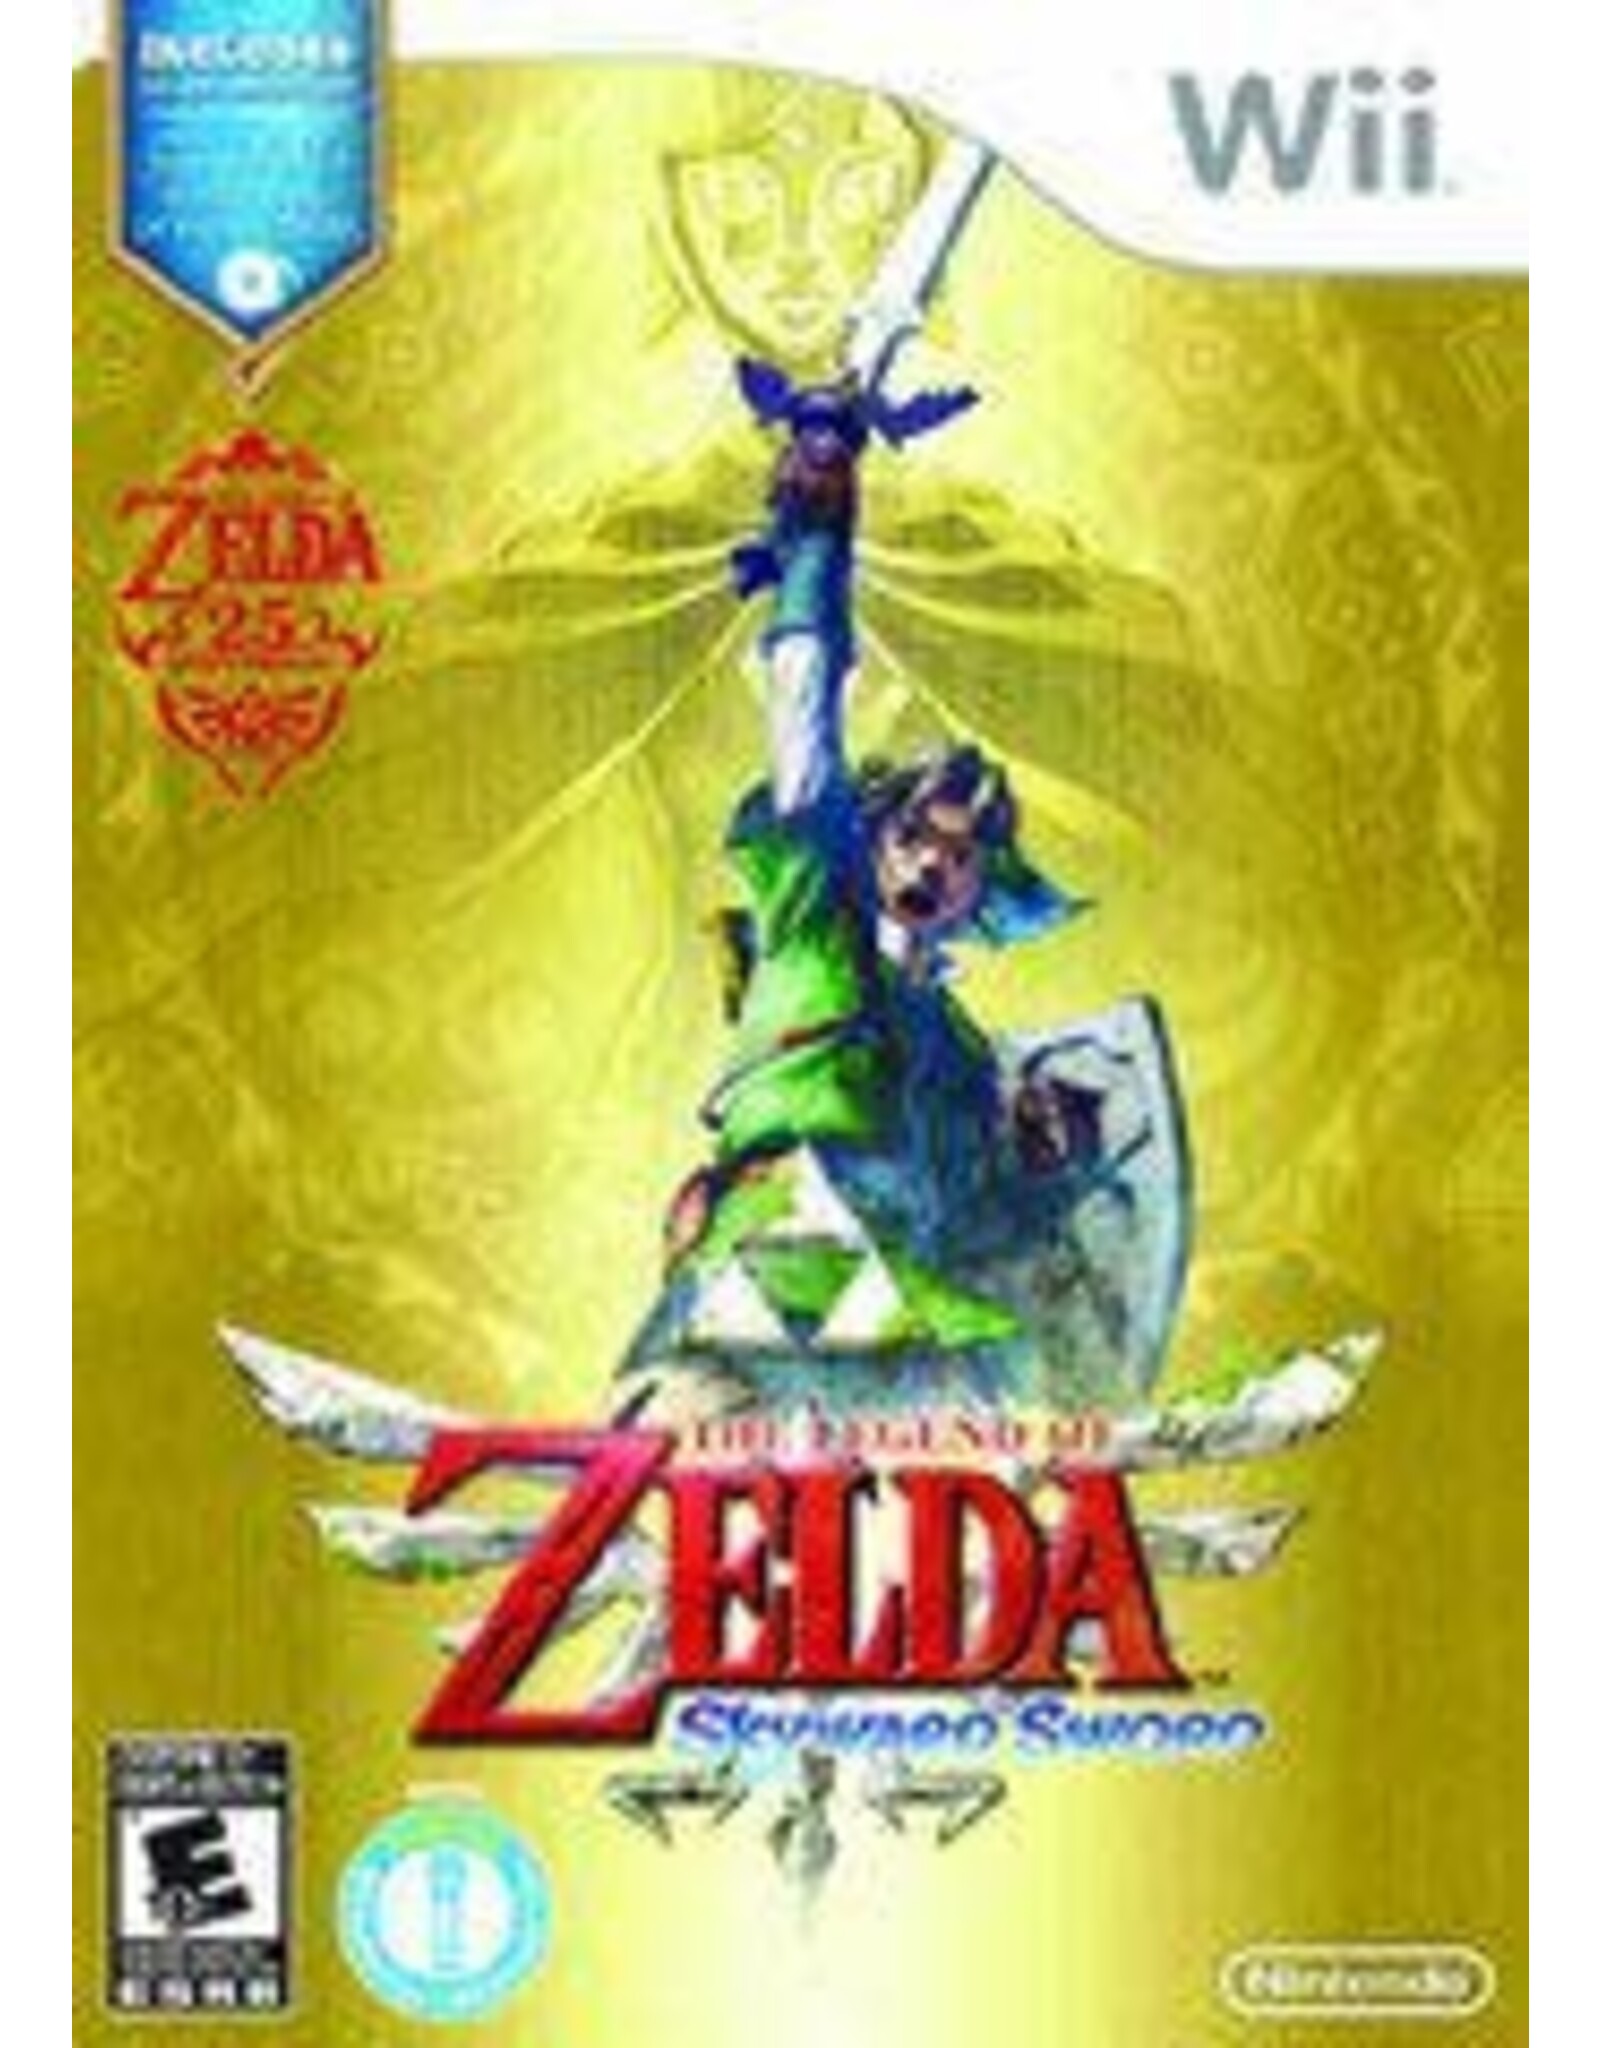 Wii Zelda Skyward Sword Music CD Bundle (Used)